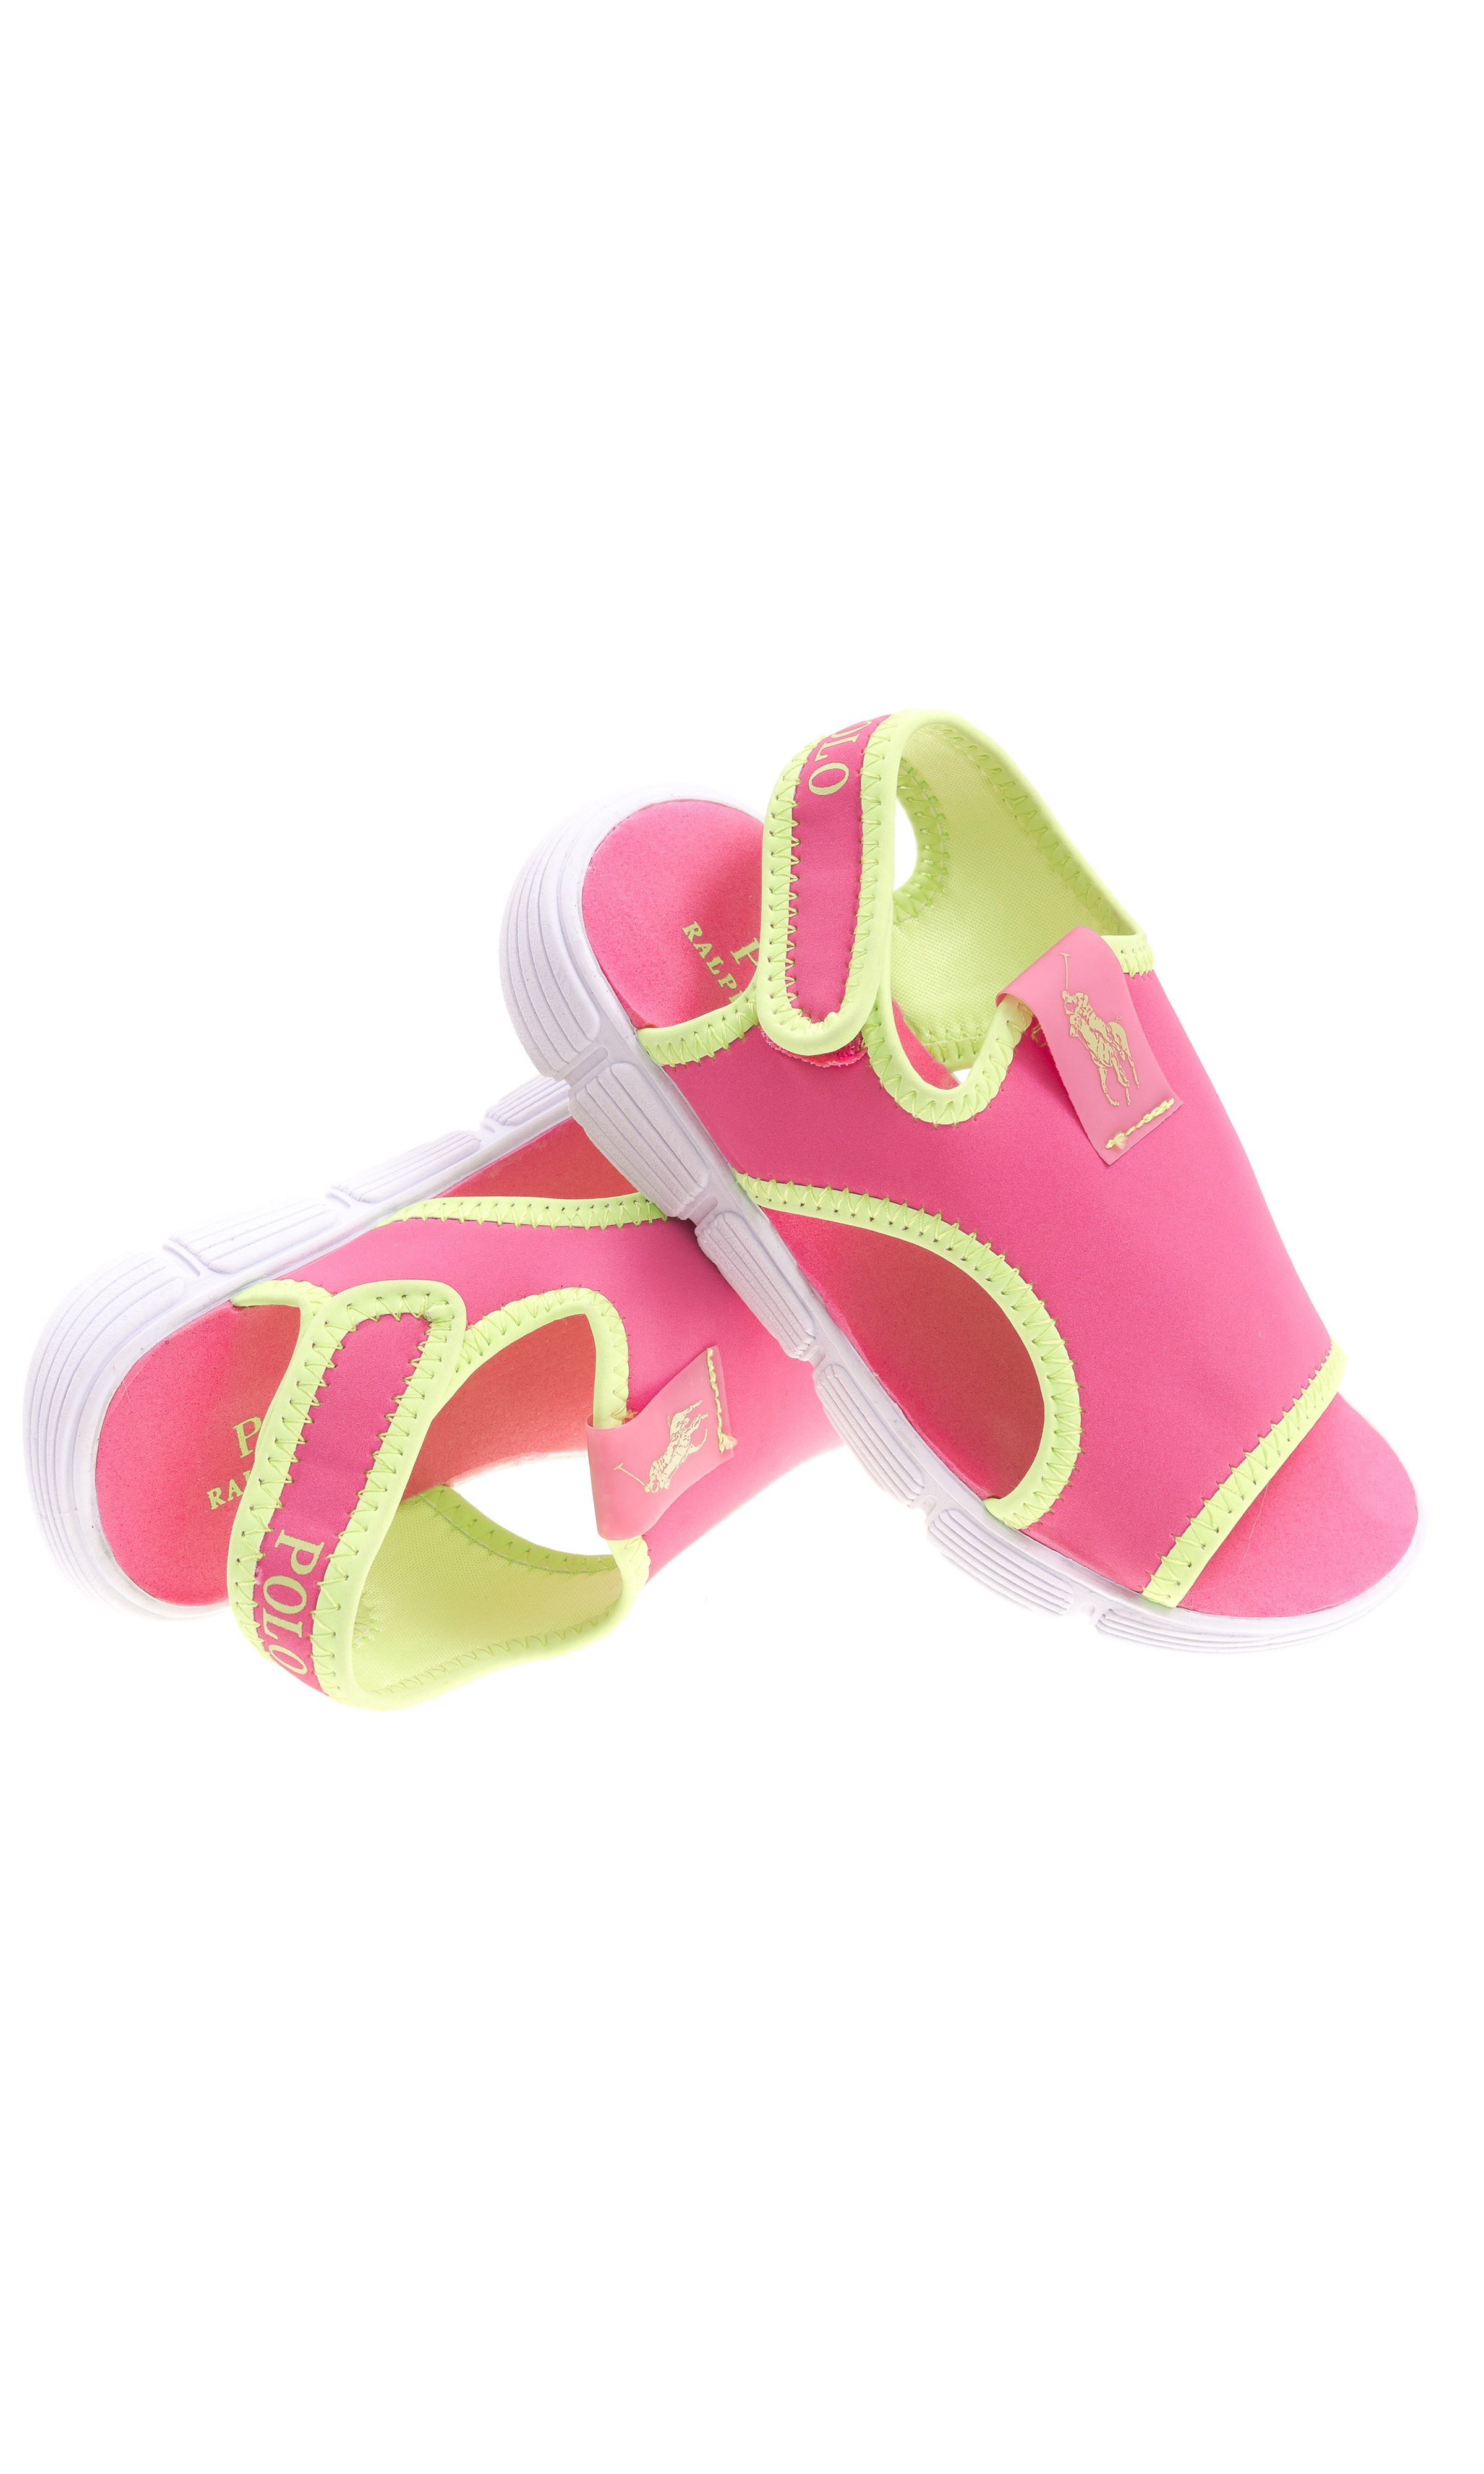 Pink beach sandals, Polo Ralph Lauren - Celebrity Club